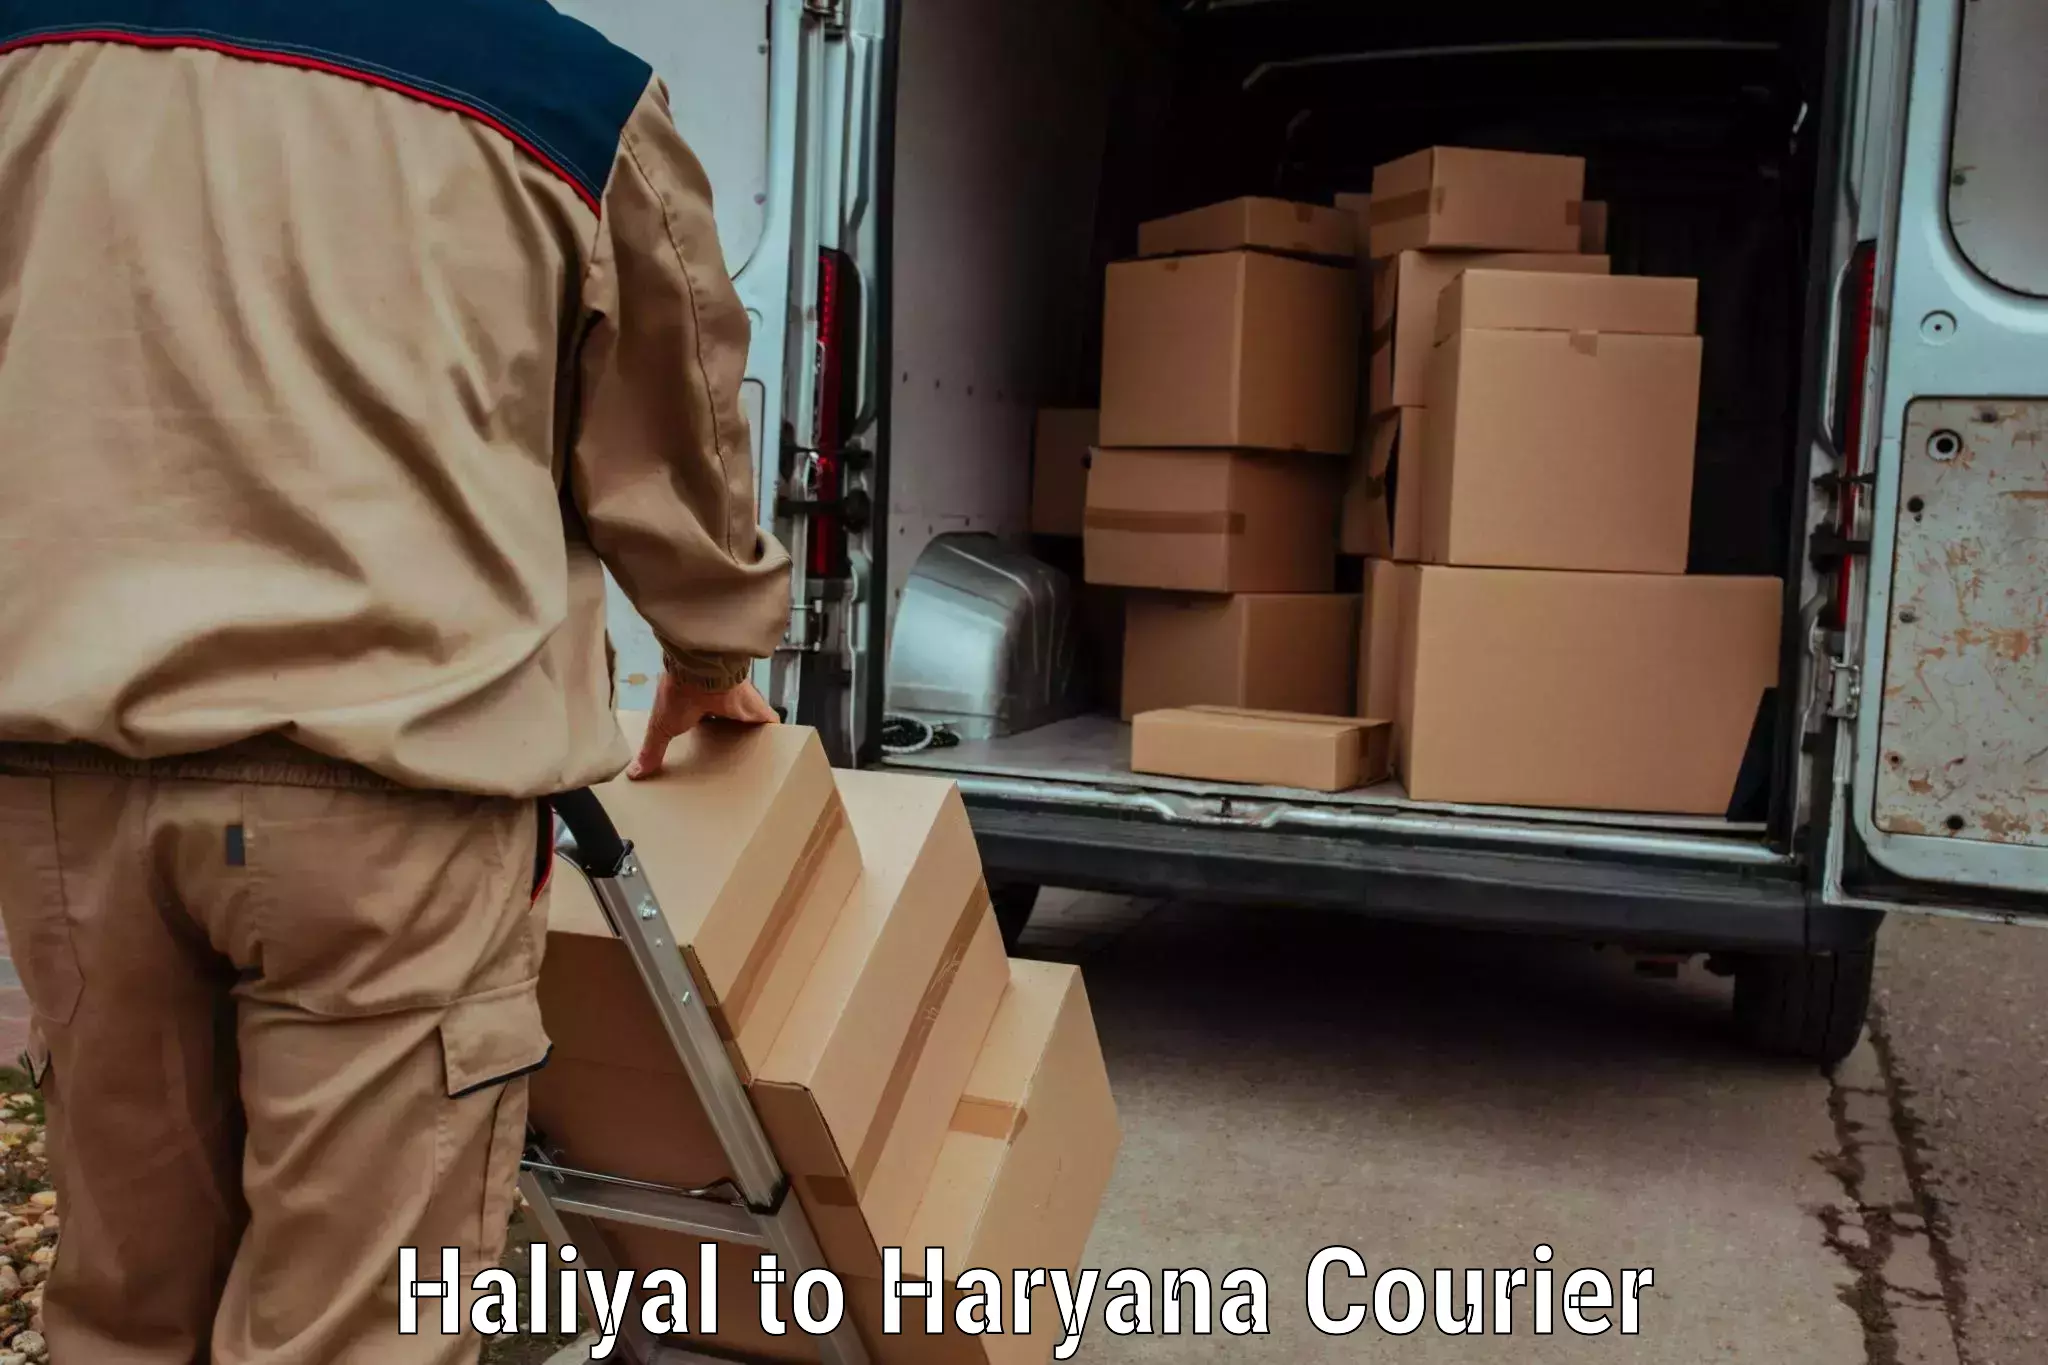 Same day luggage service in Haliyal to Haryana